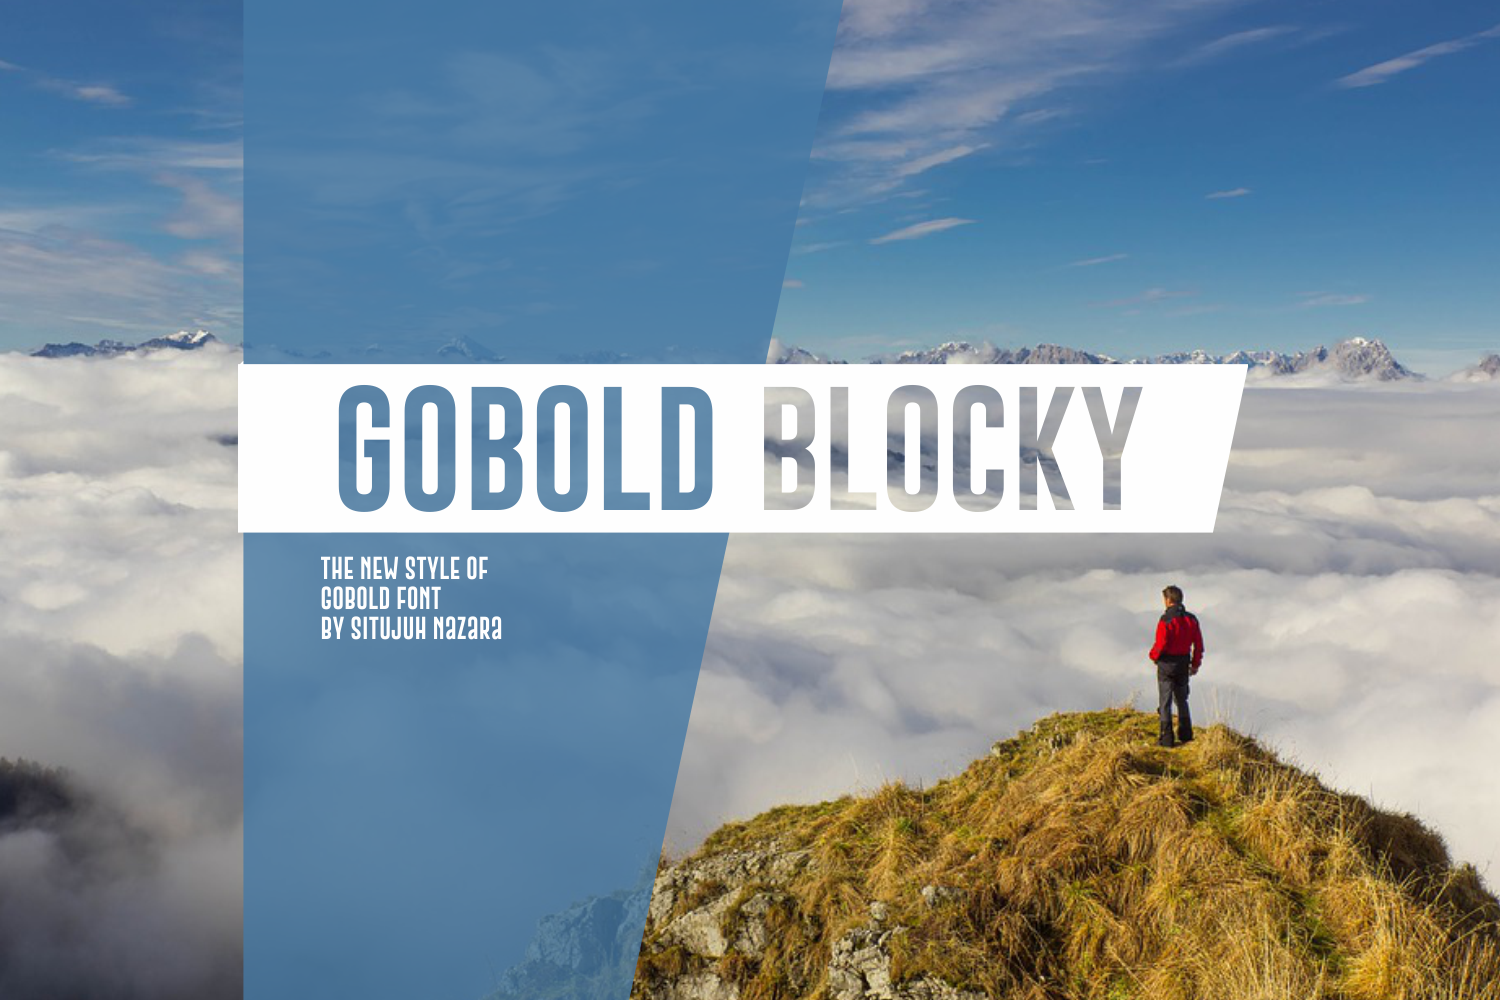 Gobold Blocky